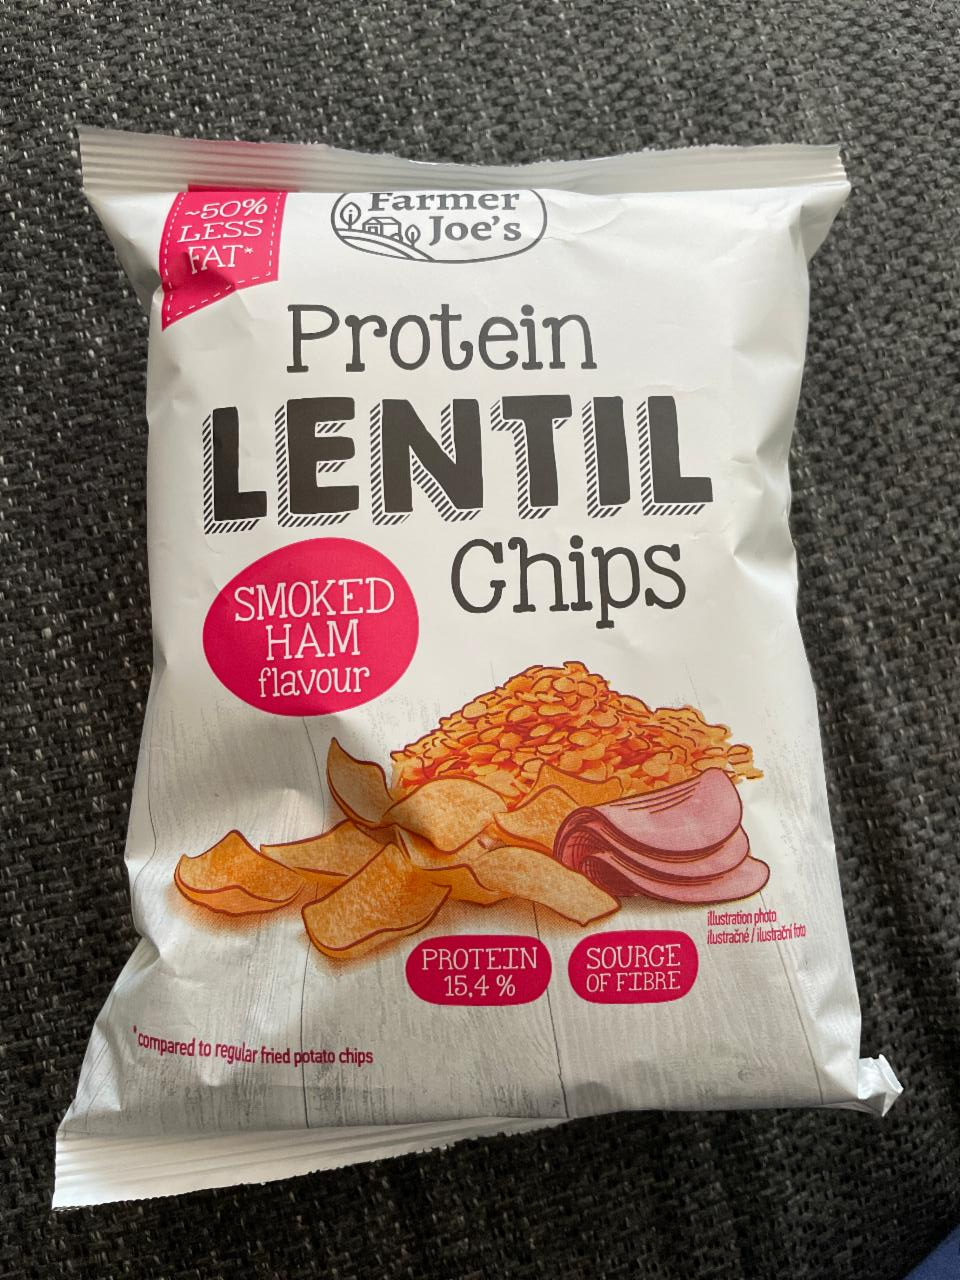 Fotografie - Protein lentil chips Smoked ham Farmer Joe’s